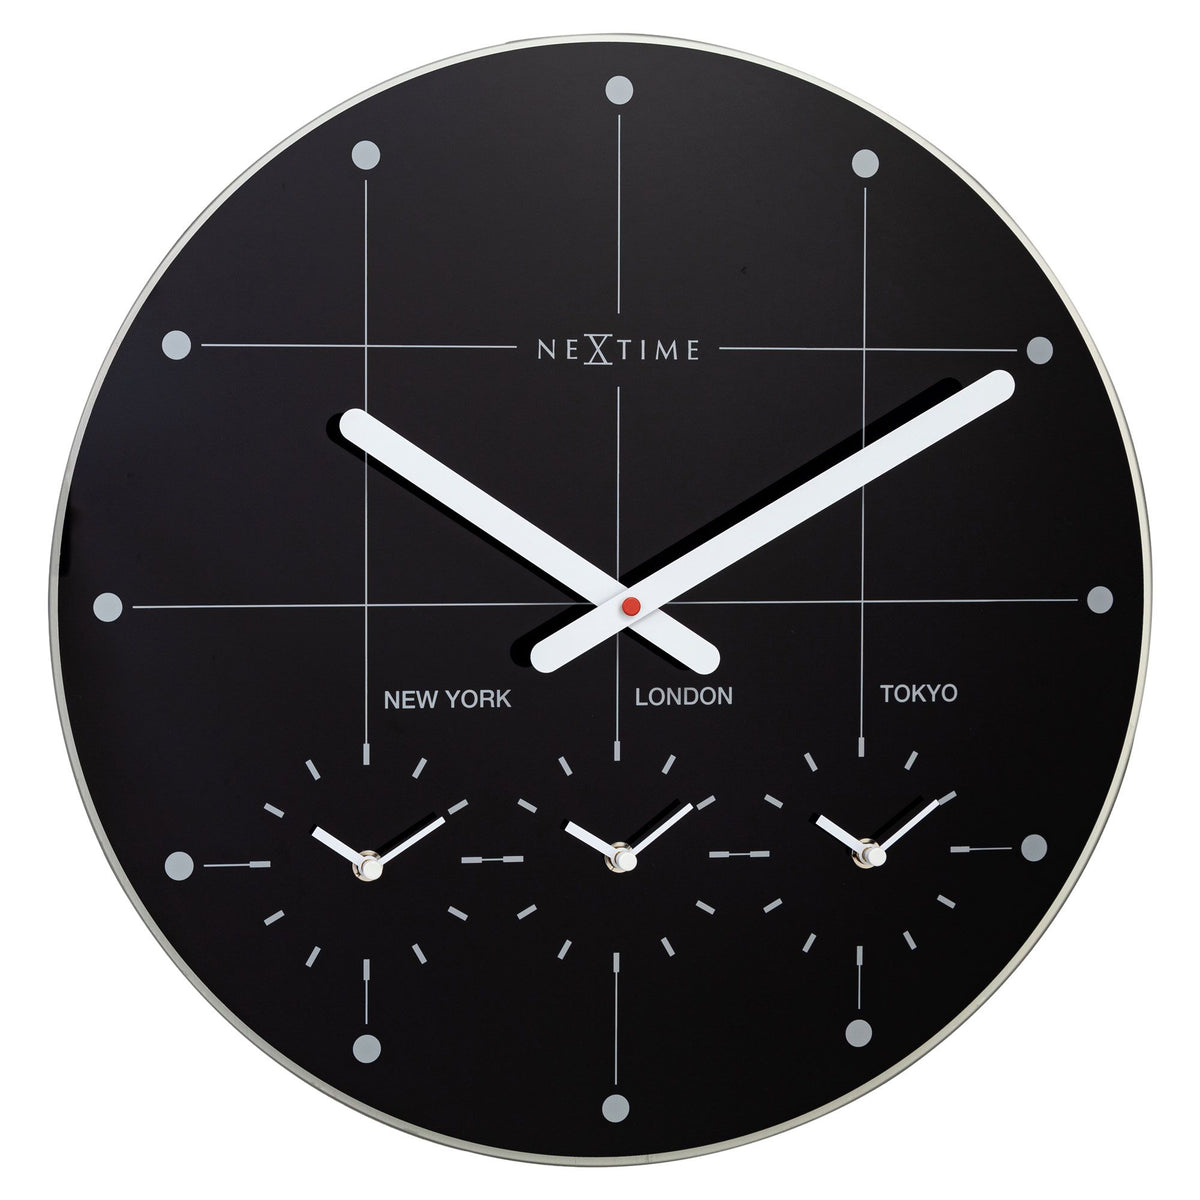 NeXtime Big City Wall Clock in Black - 43cm - Notbrand